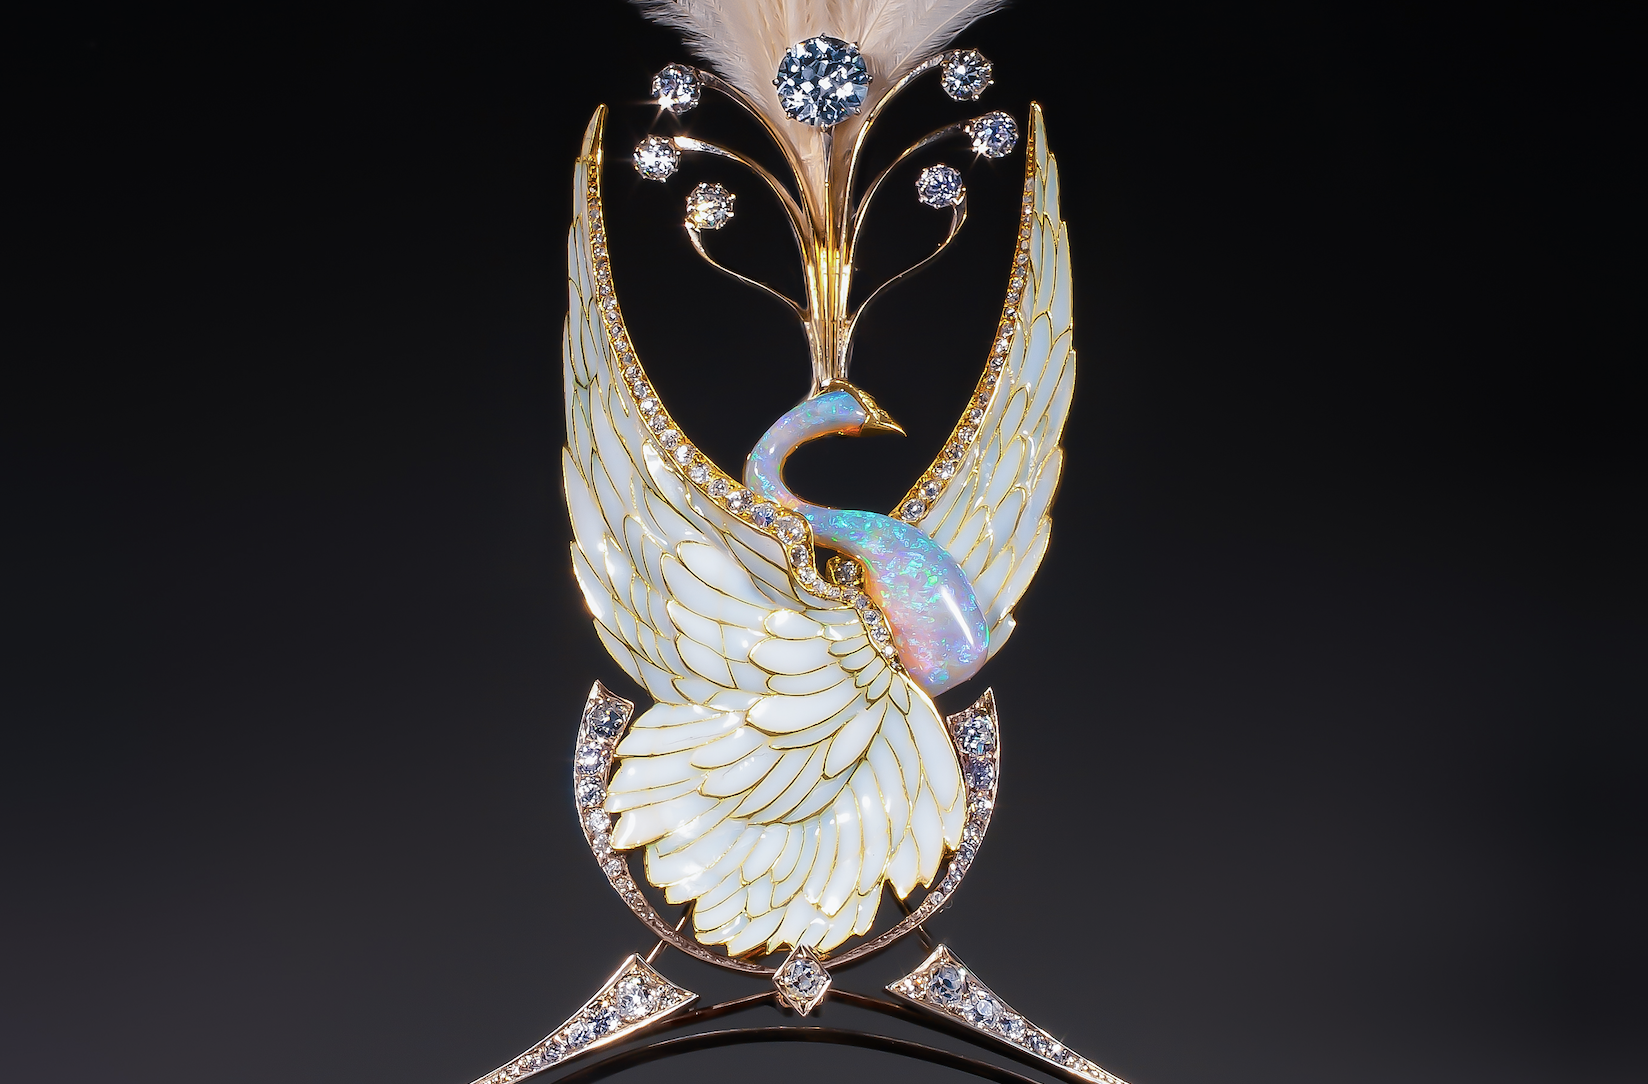 L’Art Nouveau protagonista a Brafa 2023 tra gioielli e arte floreale